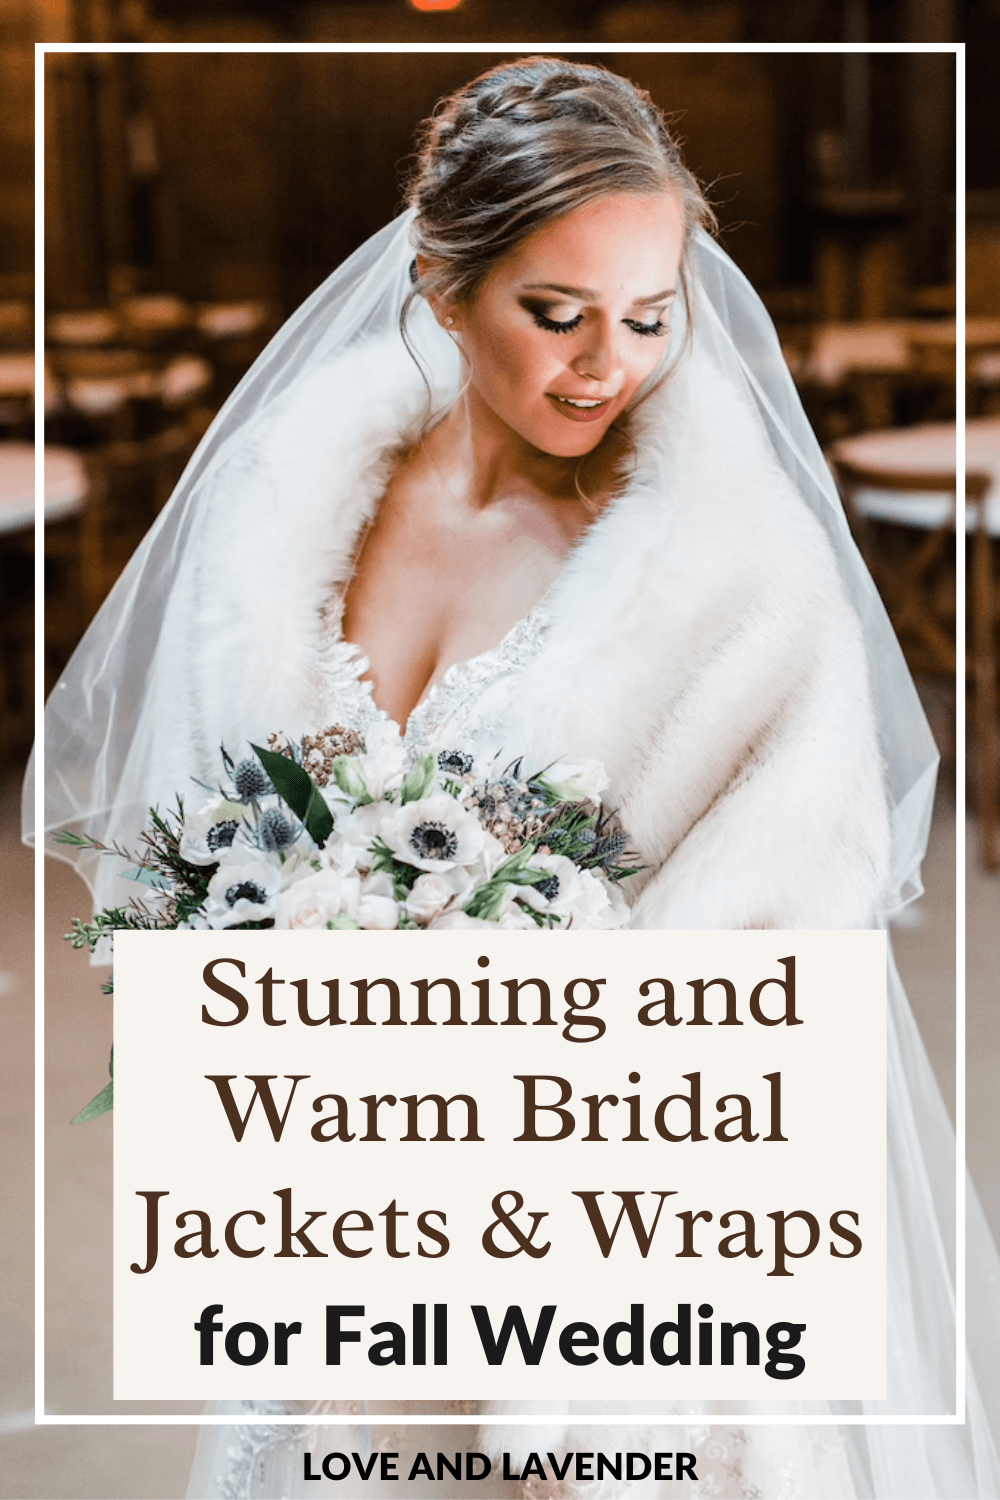 15 Stylish Bridal Jackets & Wraps to Match a Fall Wedding Gown